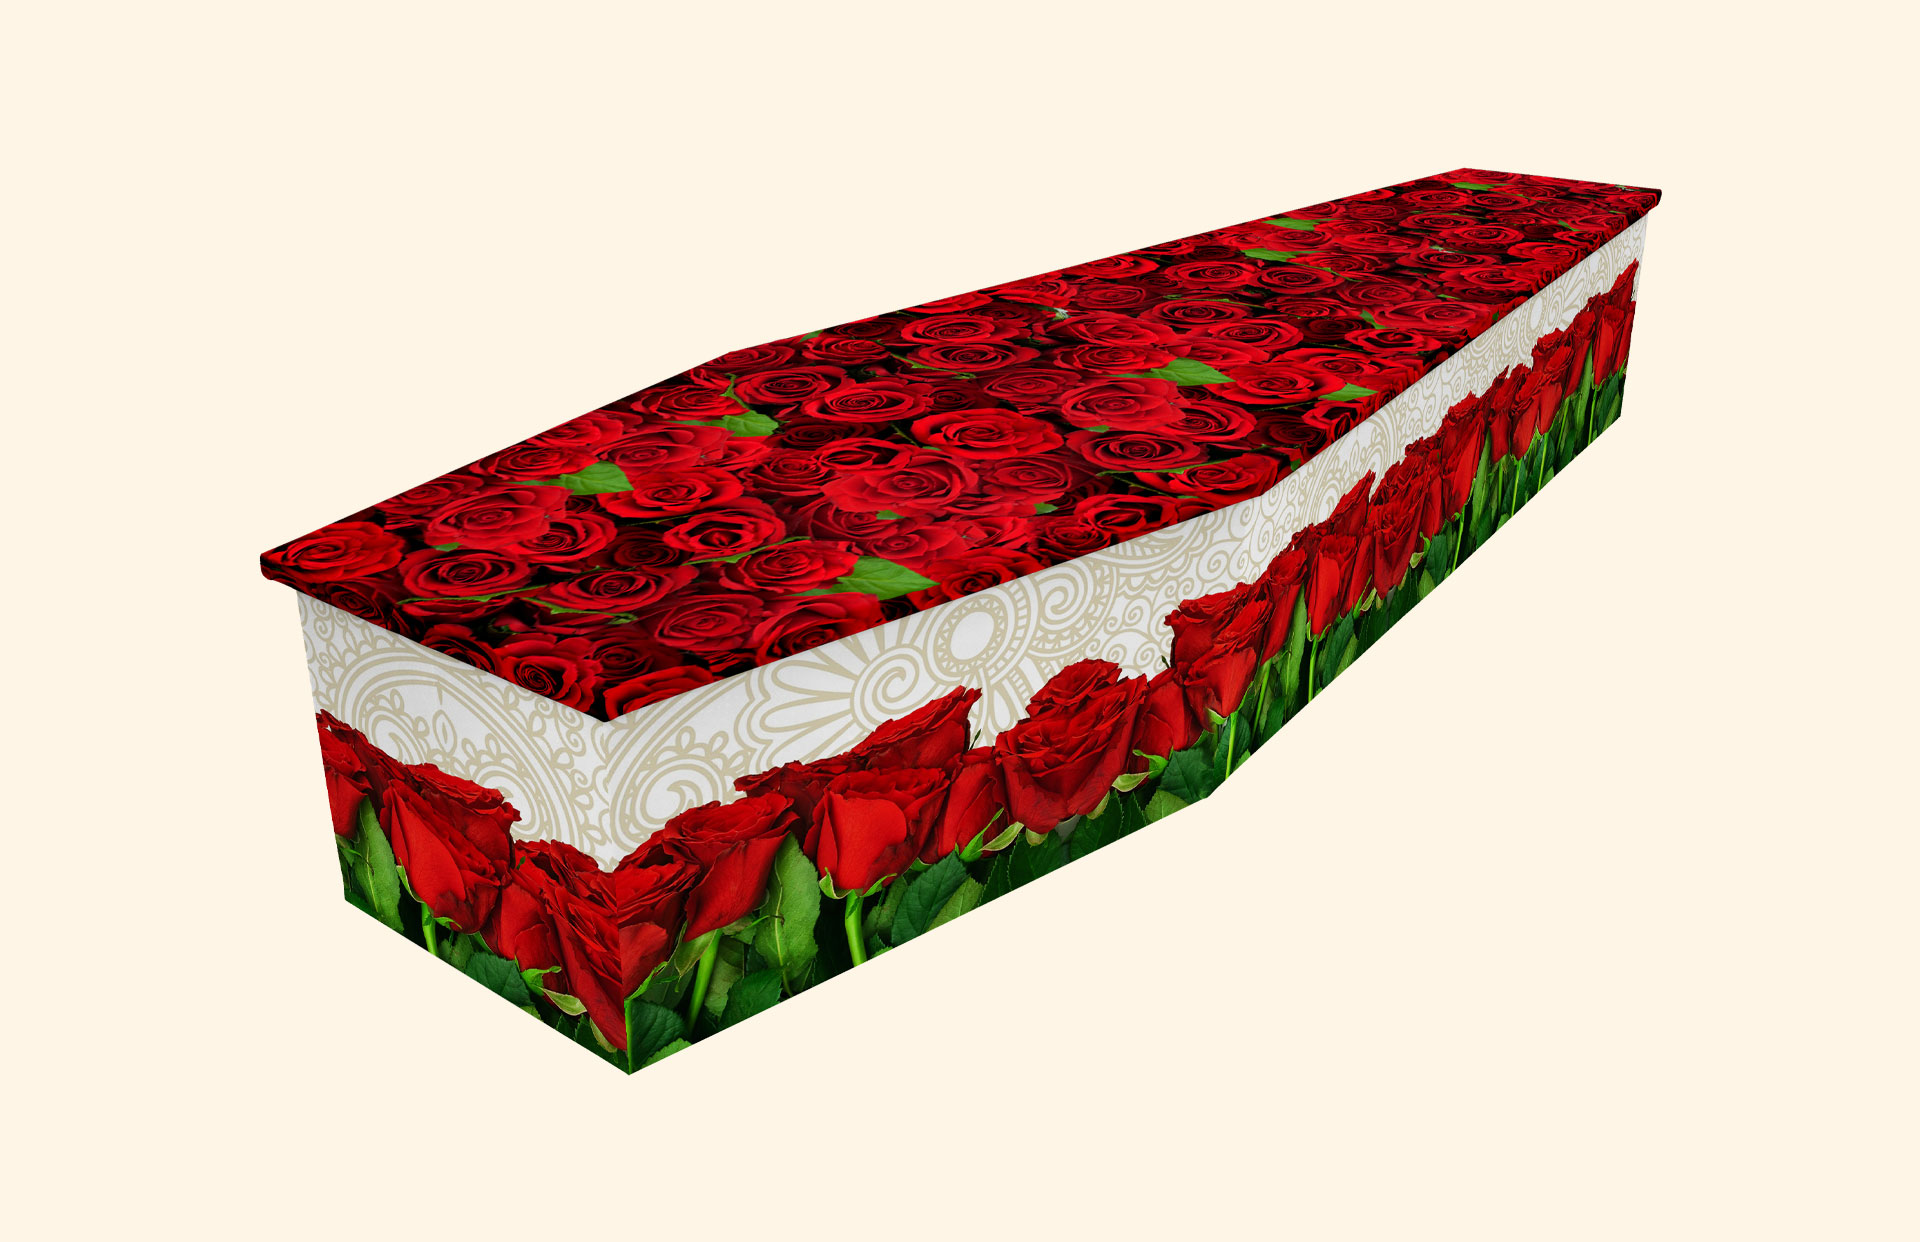 My Rosemary design on a cardboard coffin